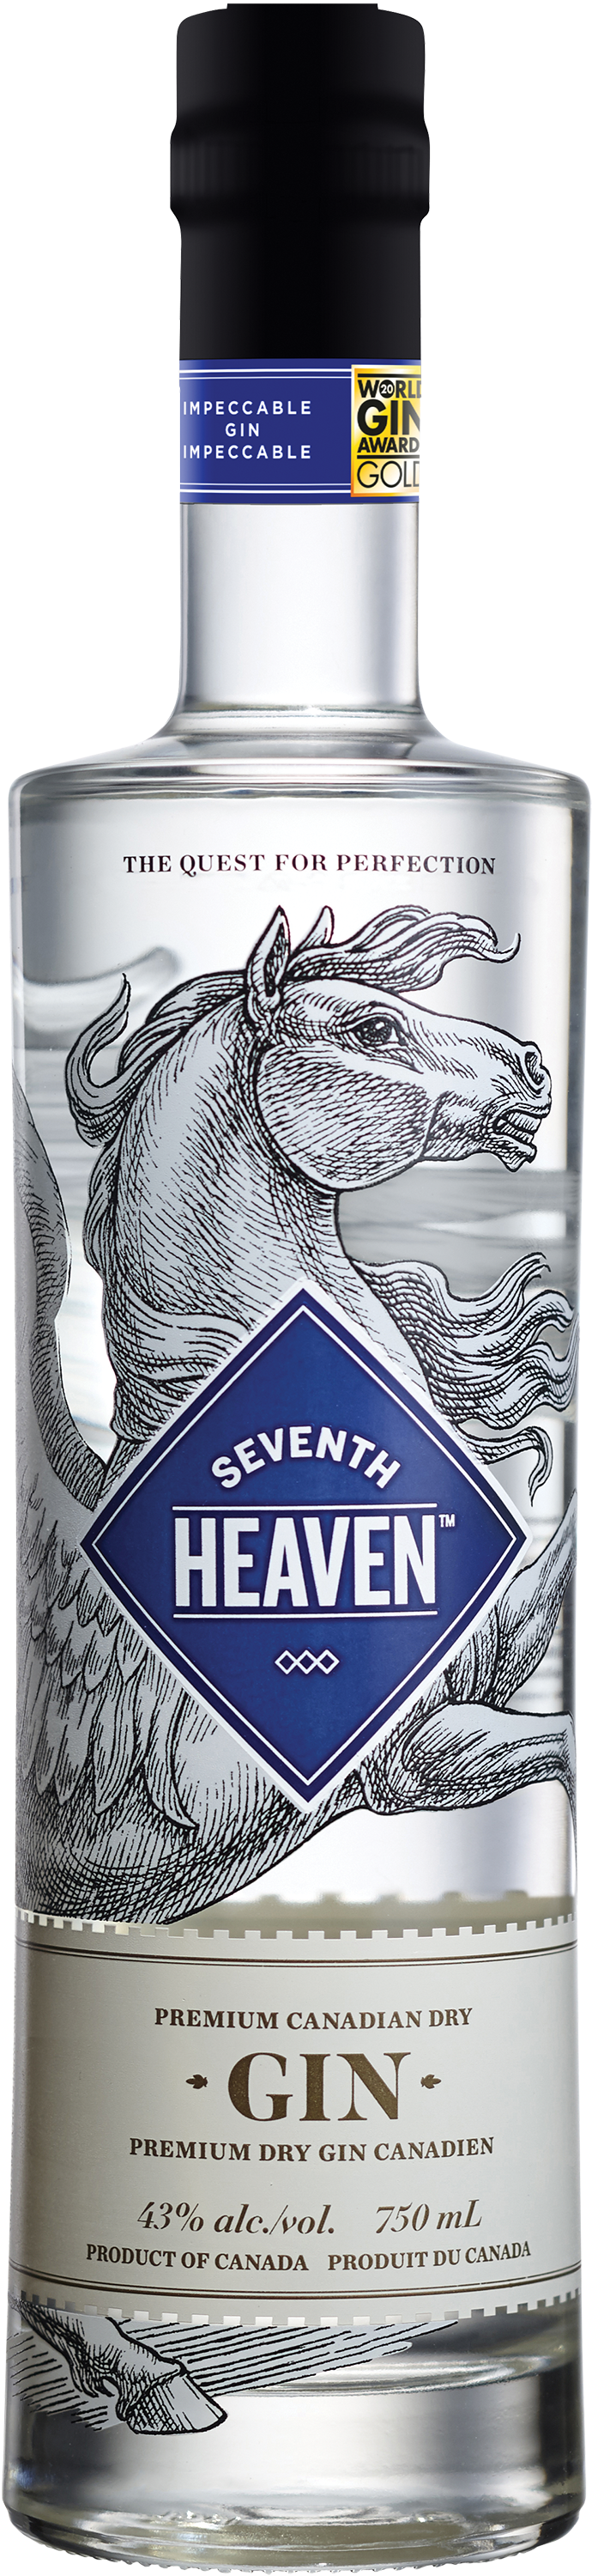 Seventh Heaven Premium Canadian Dry Gin